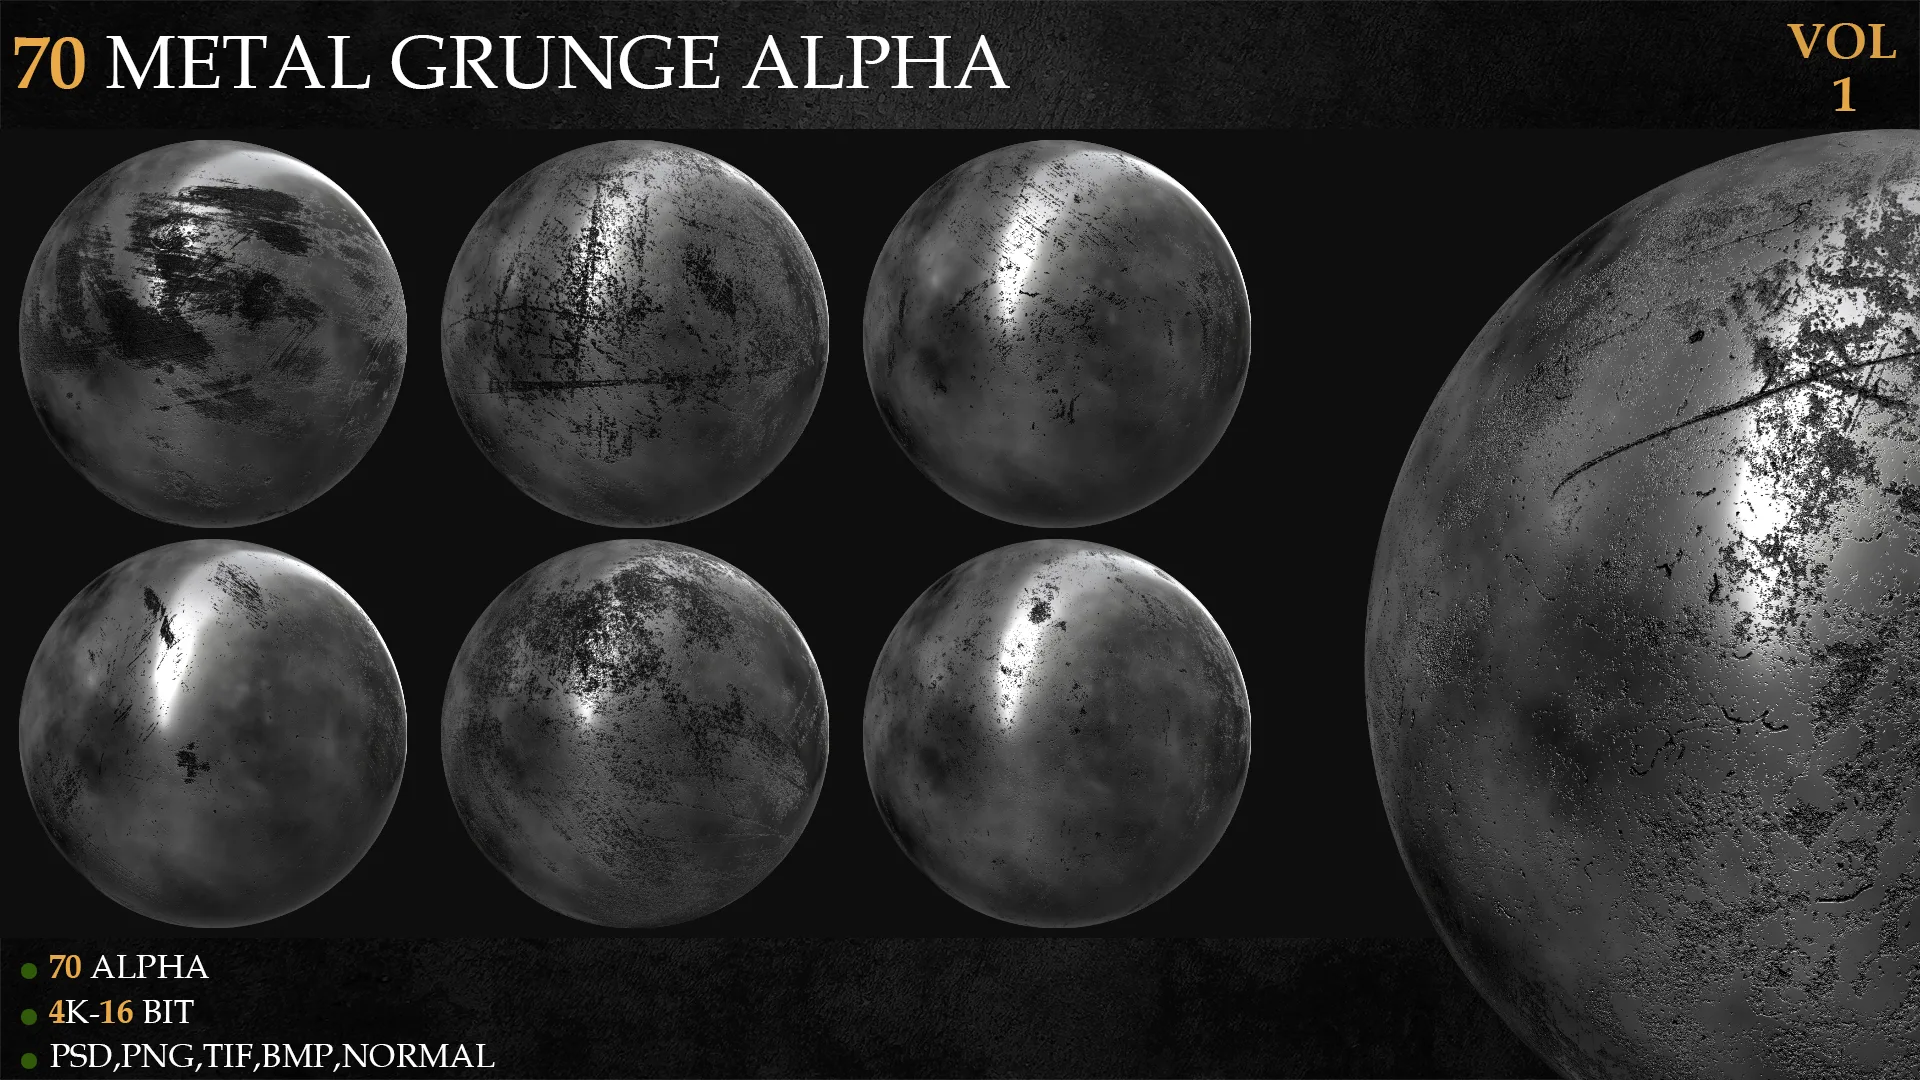 70 Metal Grunge Alpha-VOL 1